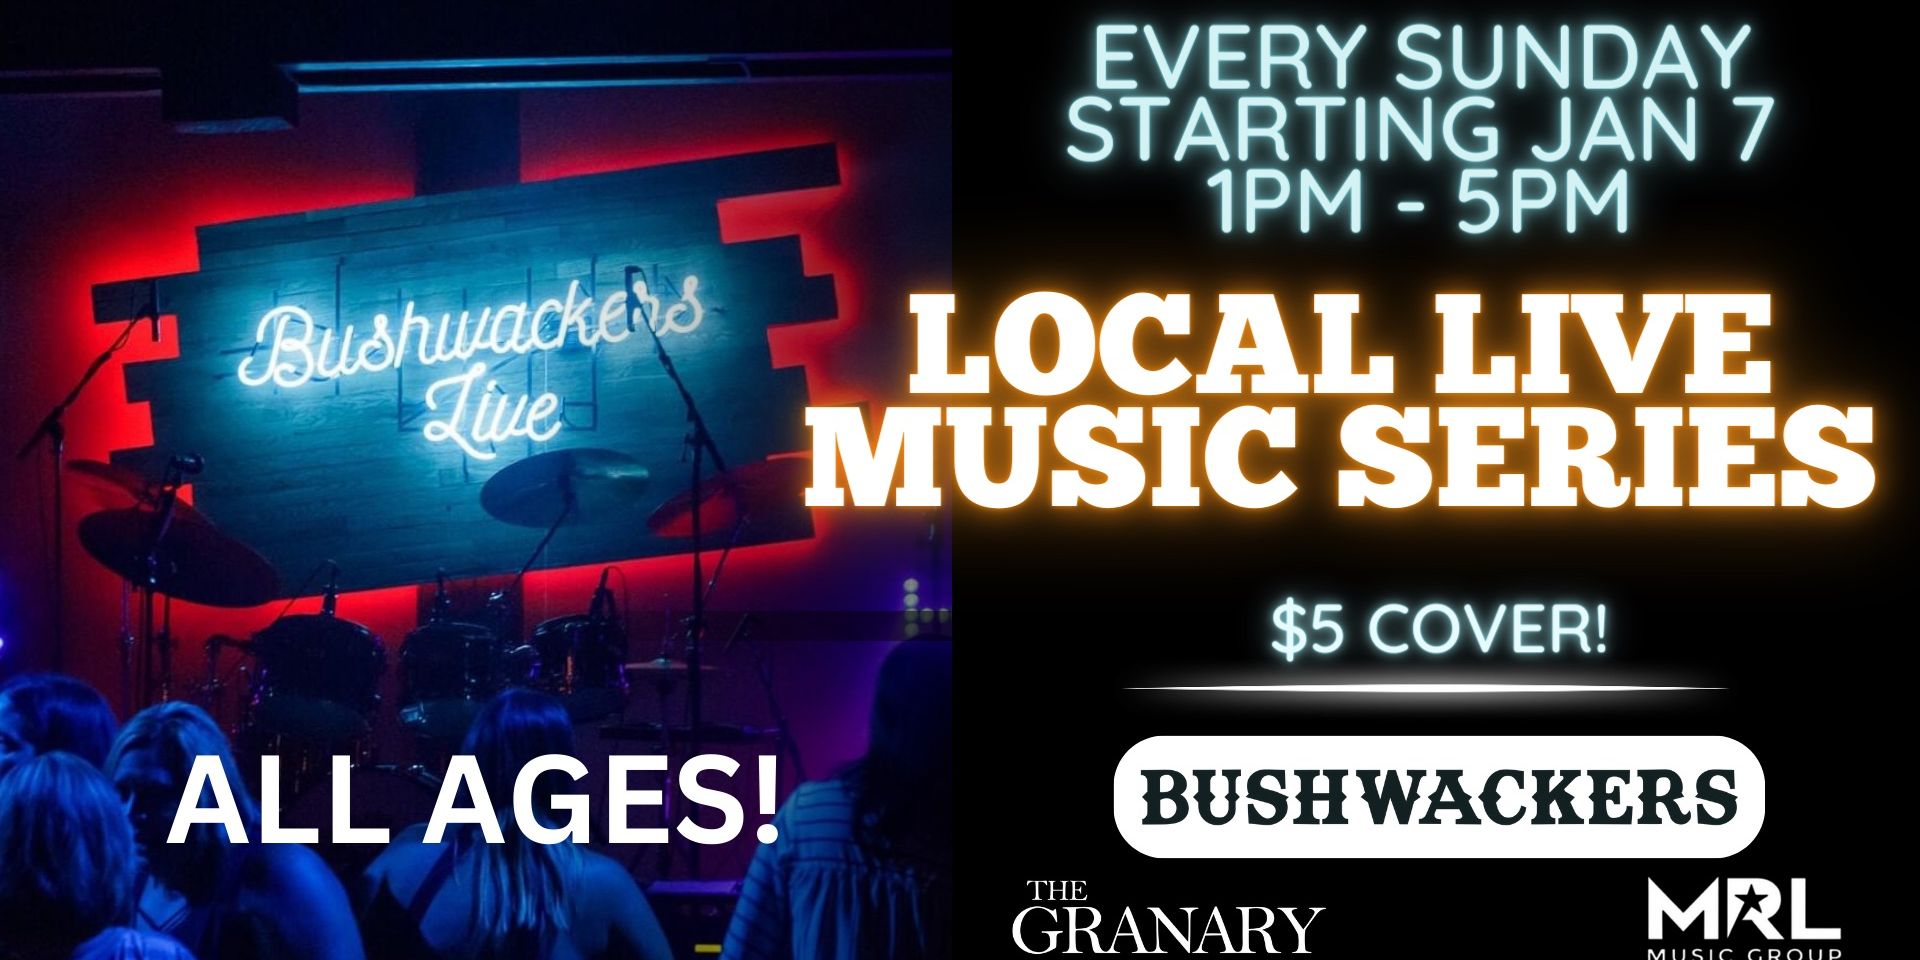 Sunday Local Music Series Live @ Bushwackers! promotional image